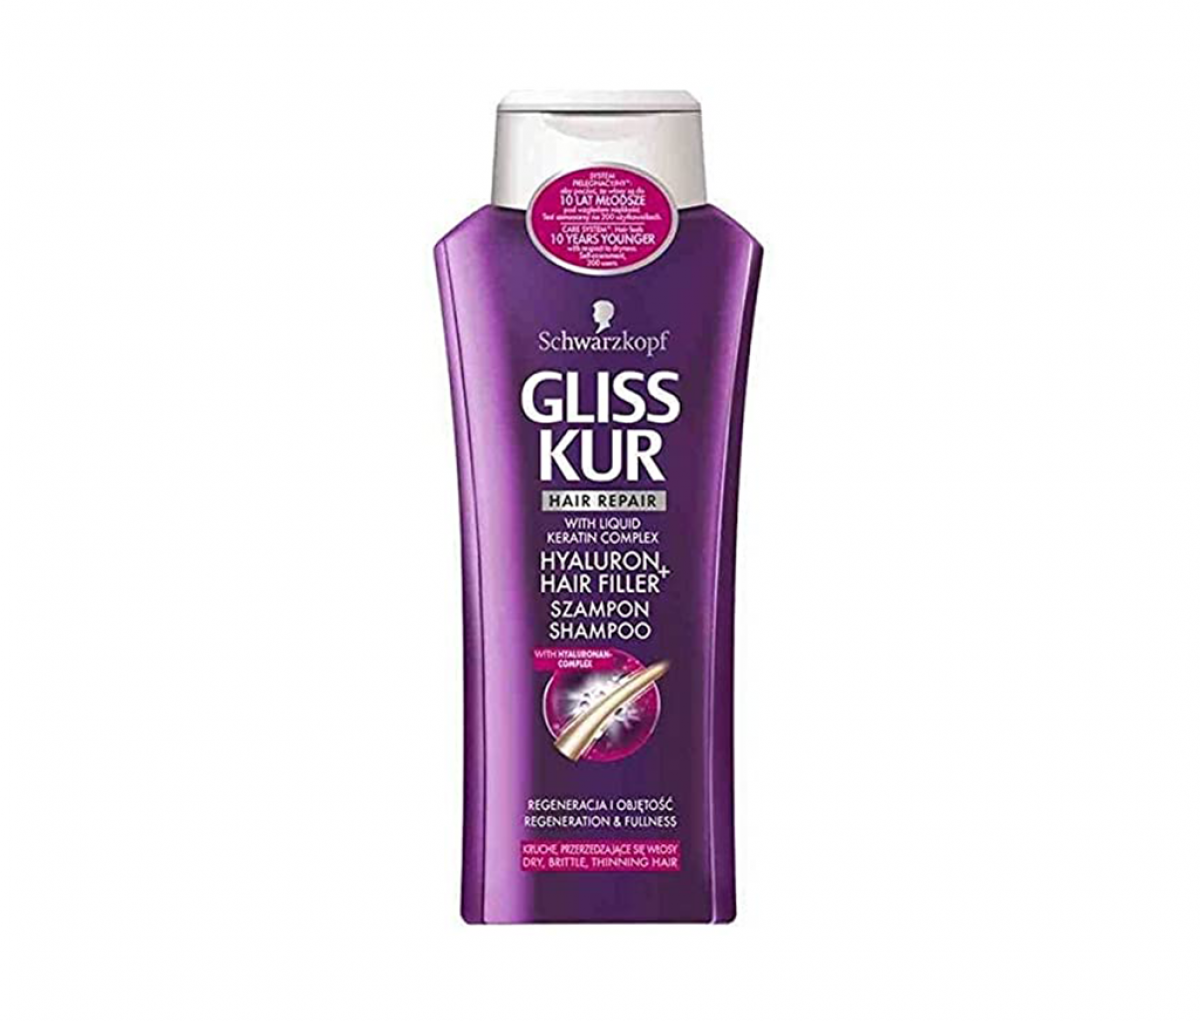 Gliss Shampoo  Hyaluron   Hair Filler